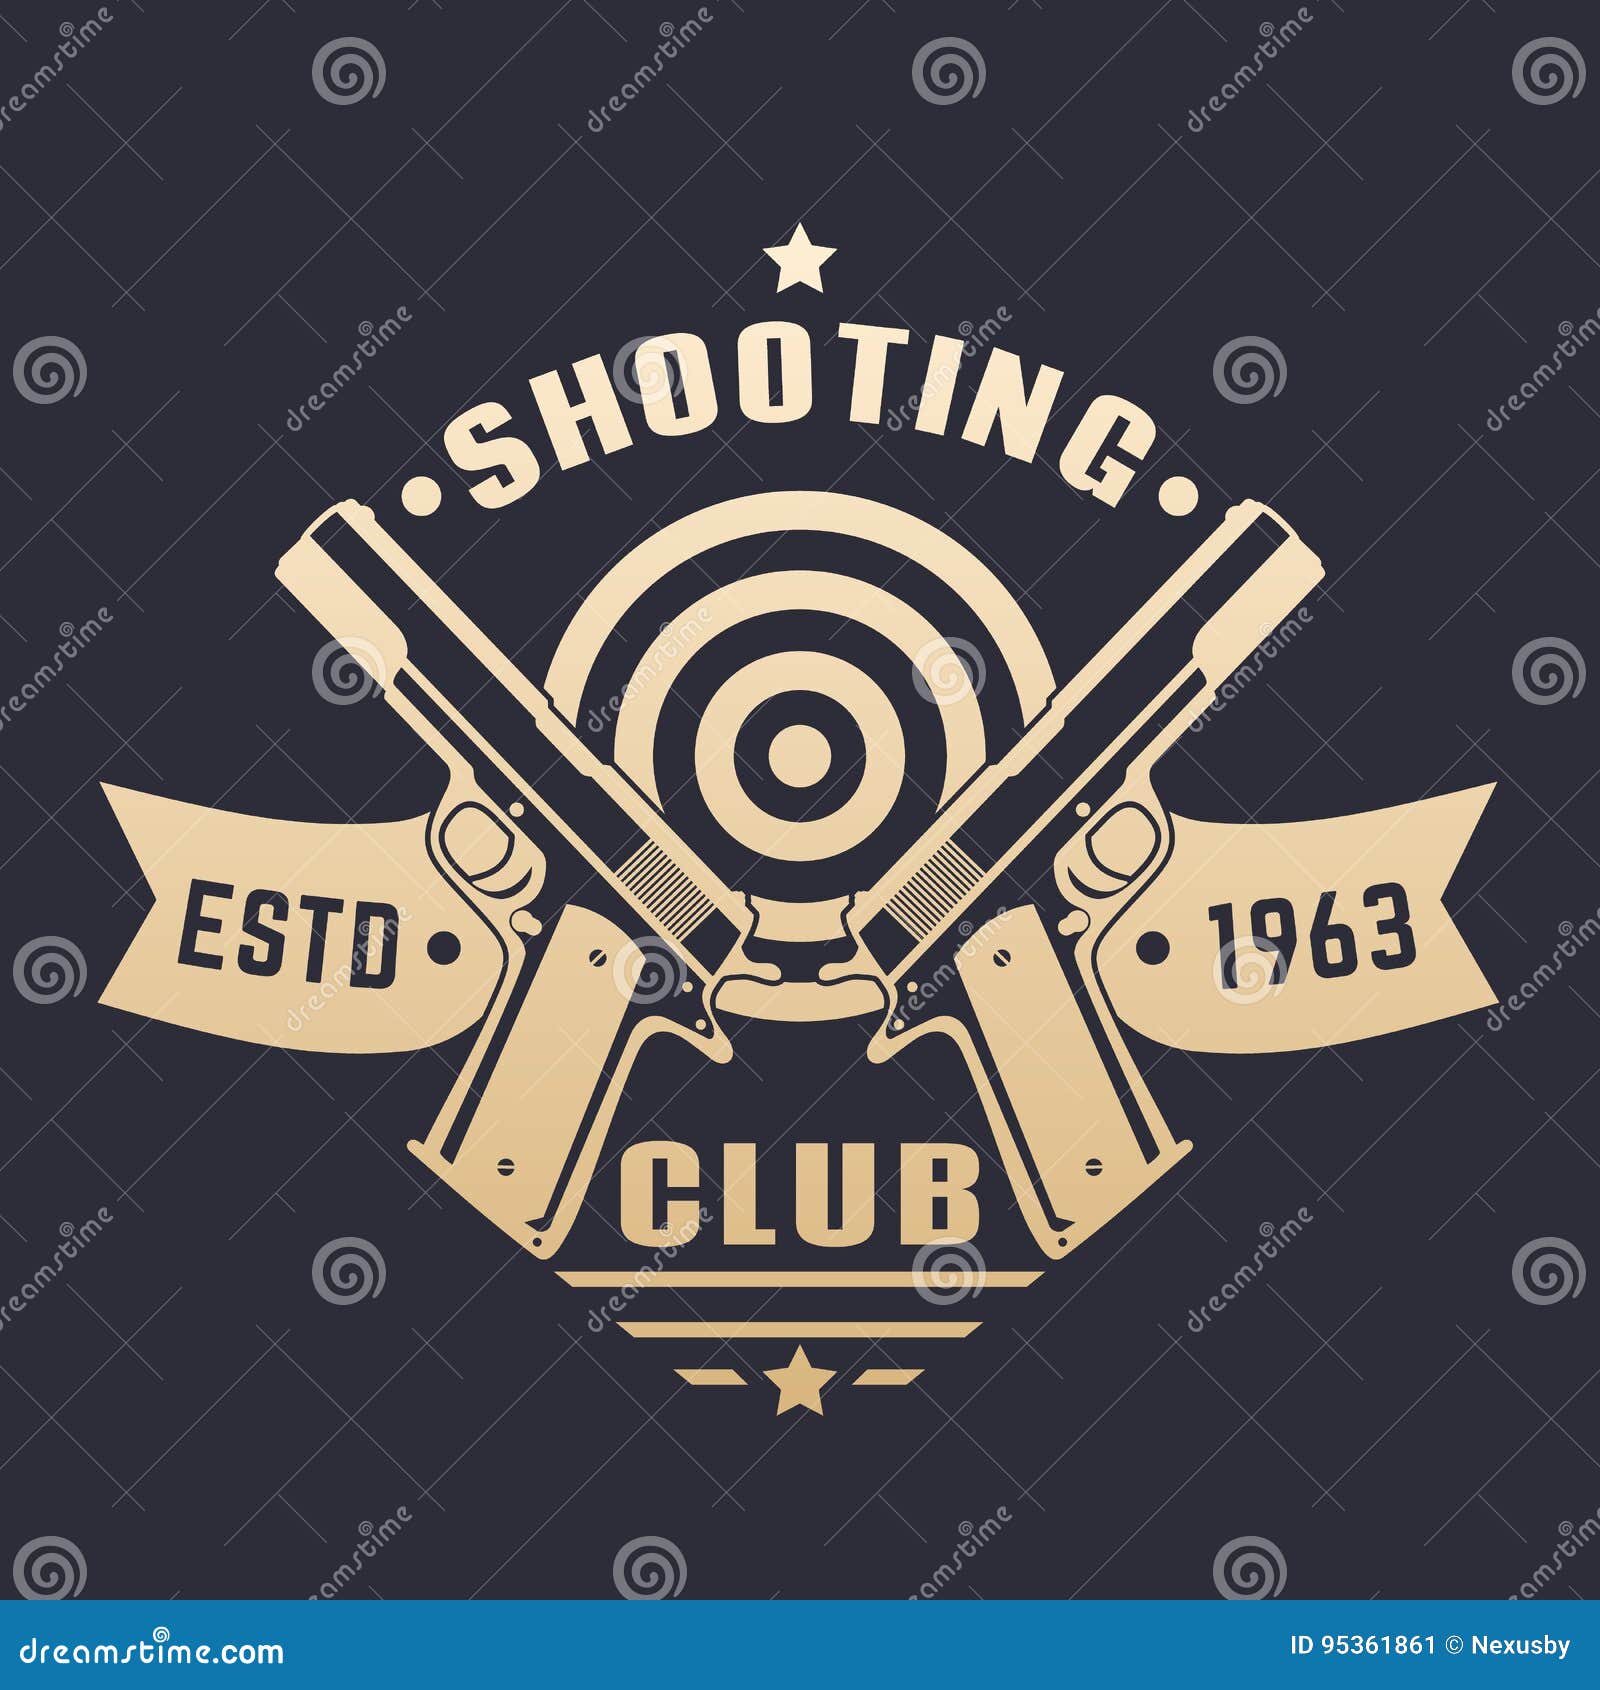 Diana shooting sport logo badge sticker 